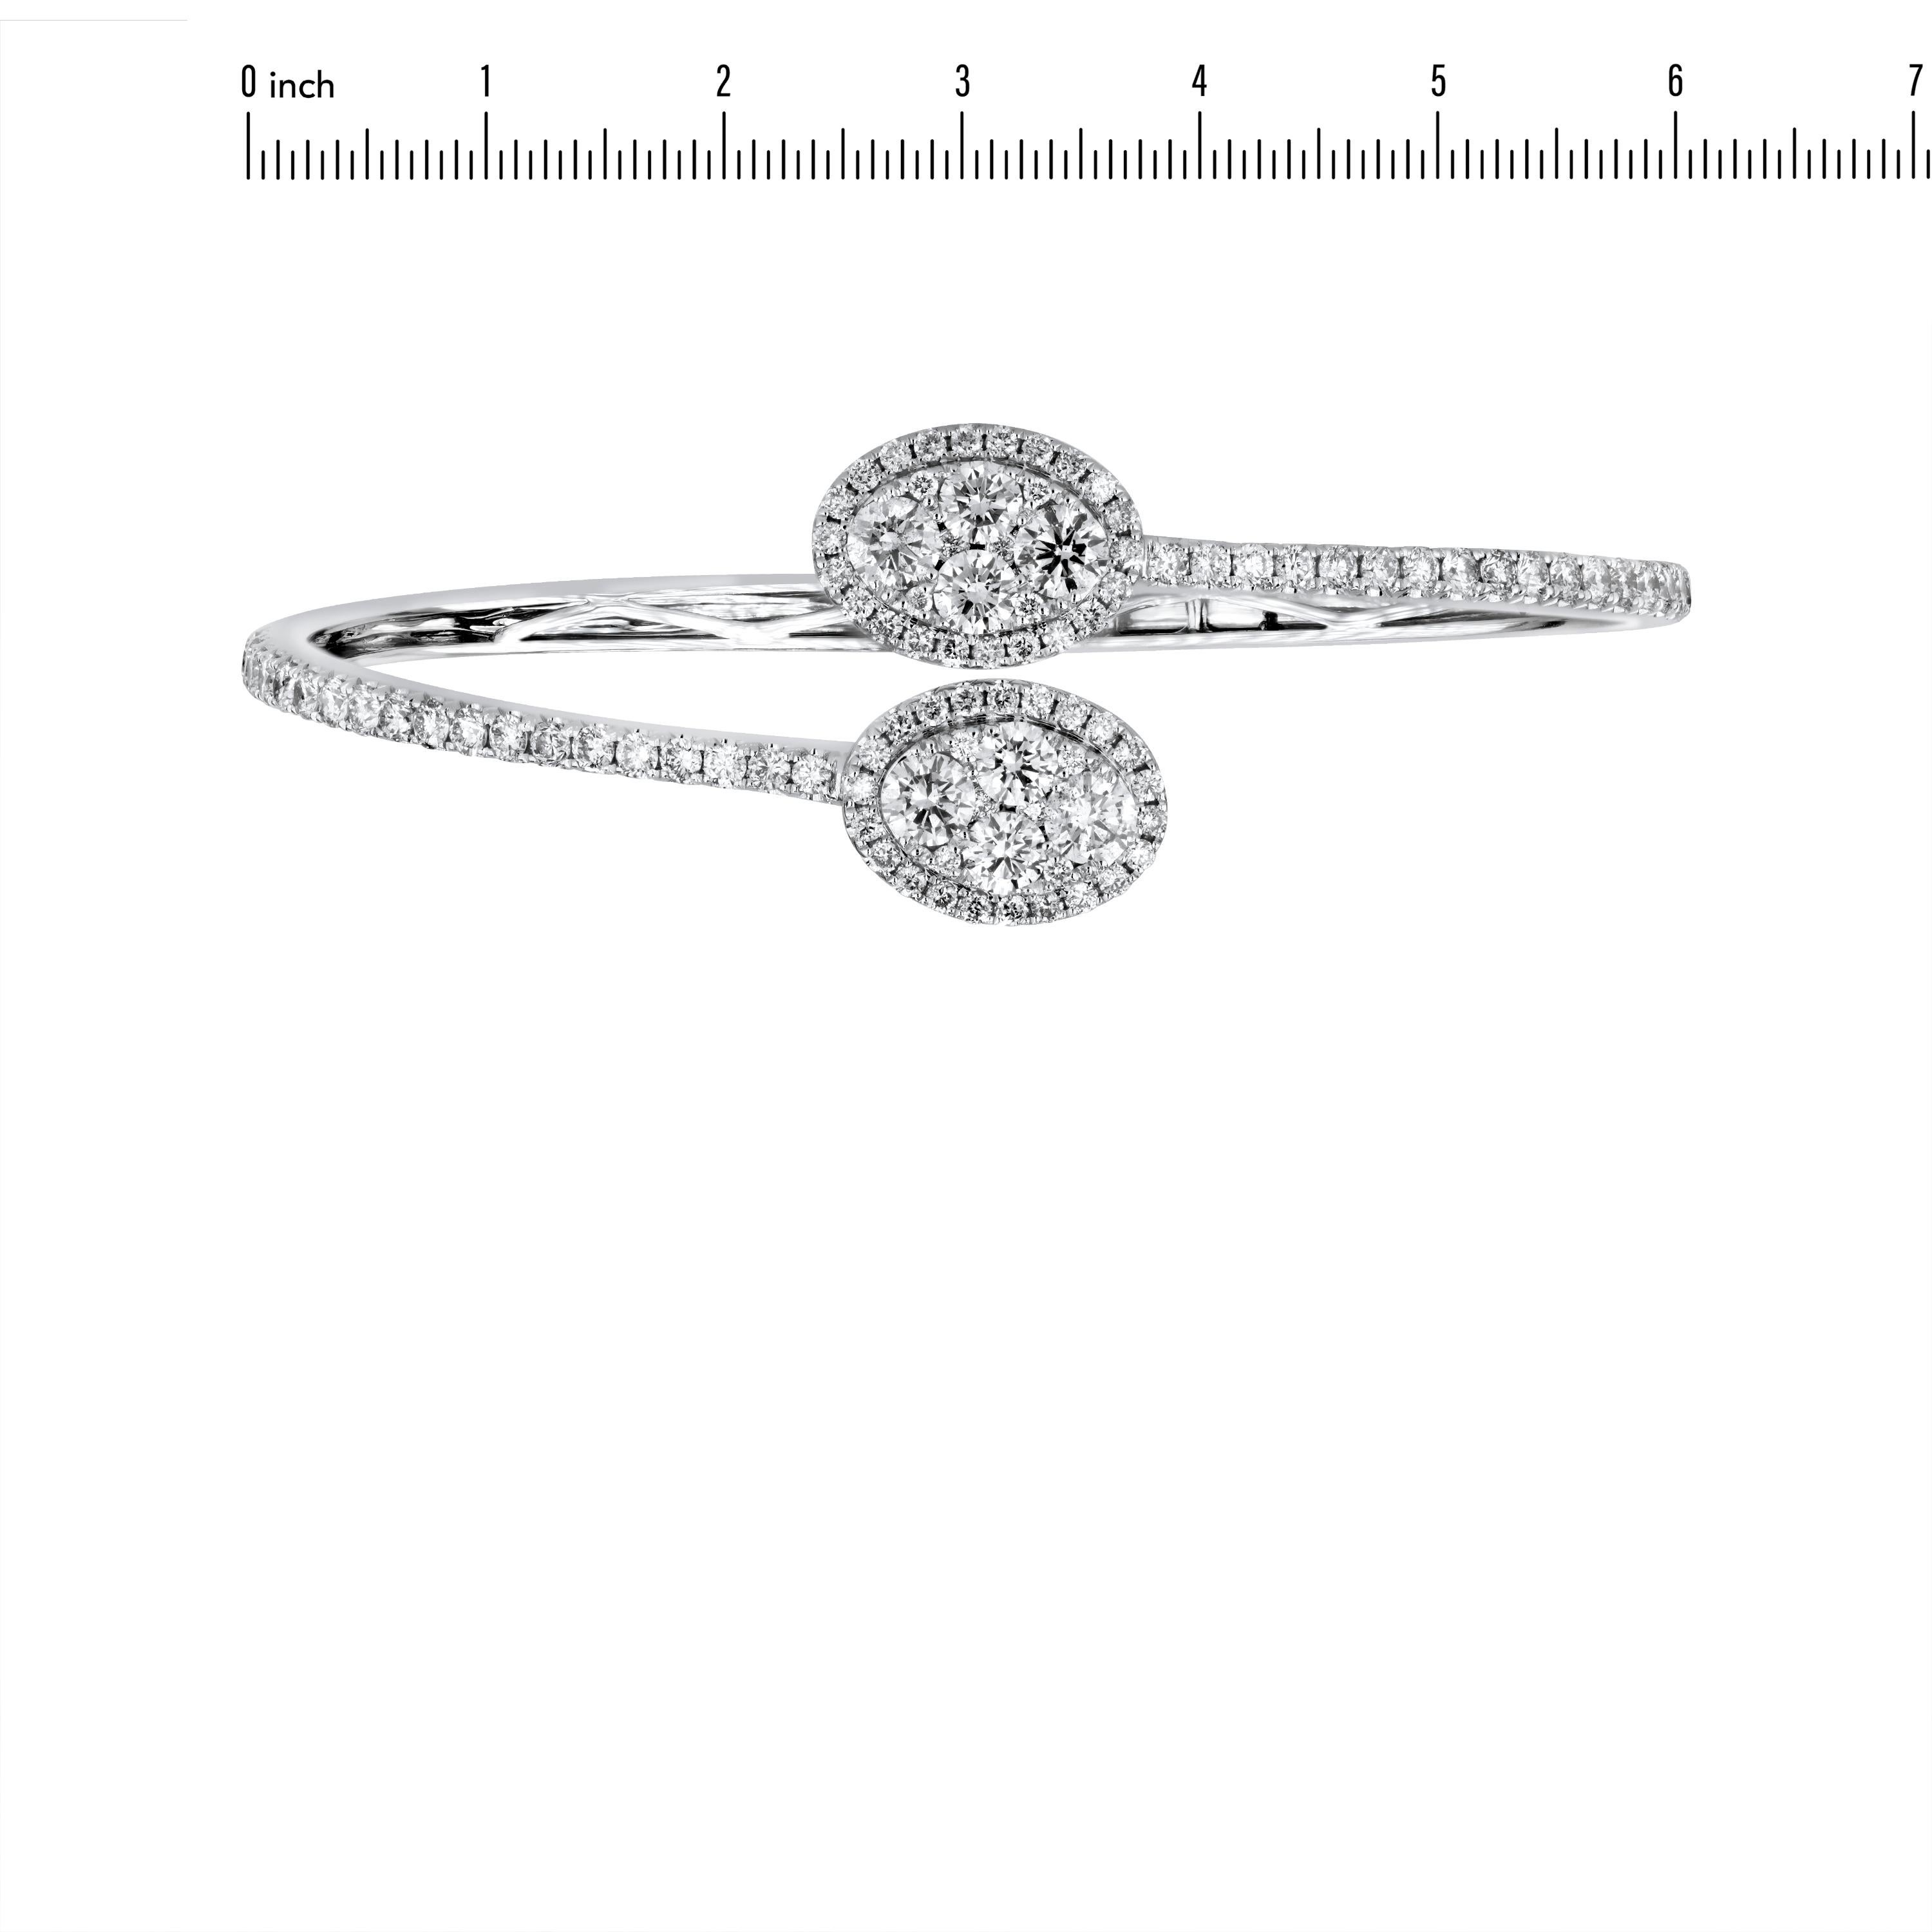 Women's 3.12 Carat Diamond Bangle Bracelet with Oval Shape Heads in 14W Gold ref177 For Sale